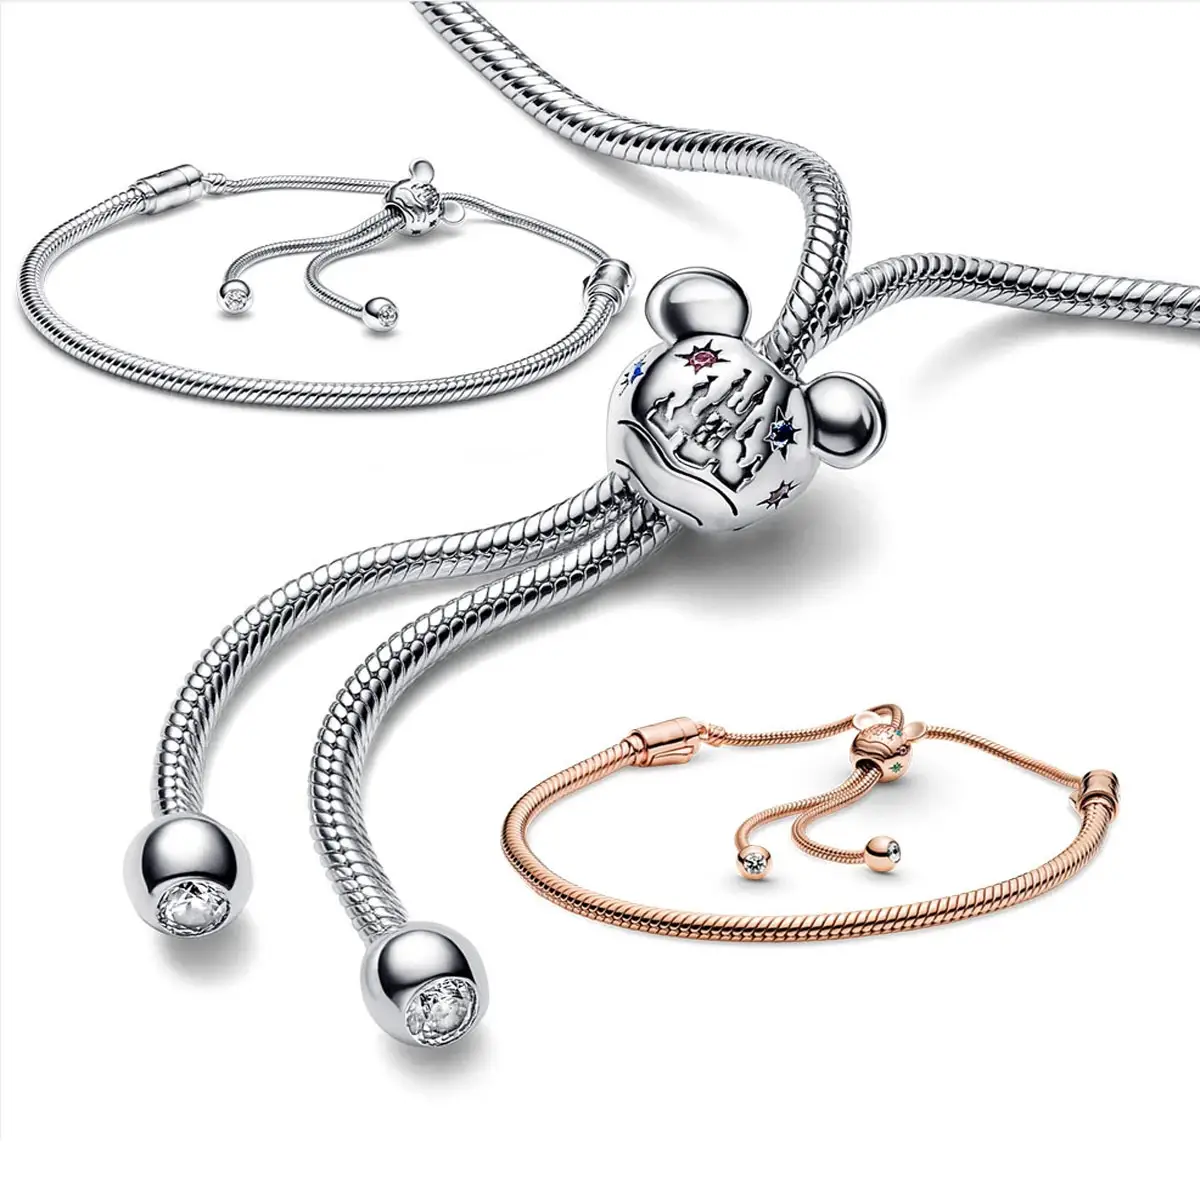 Wholesale High Quality 925 sterling silver heart bracelet women fit pandoraers charms bracelets jewelry